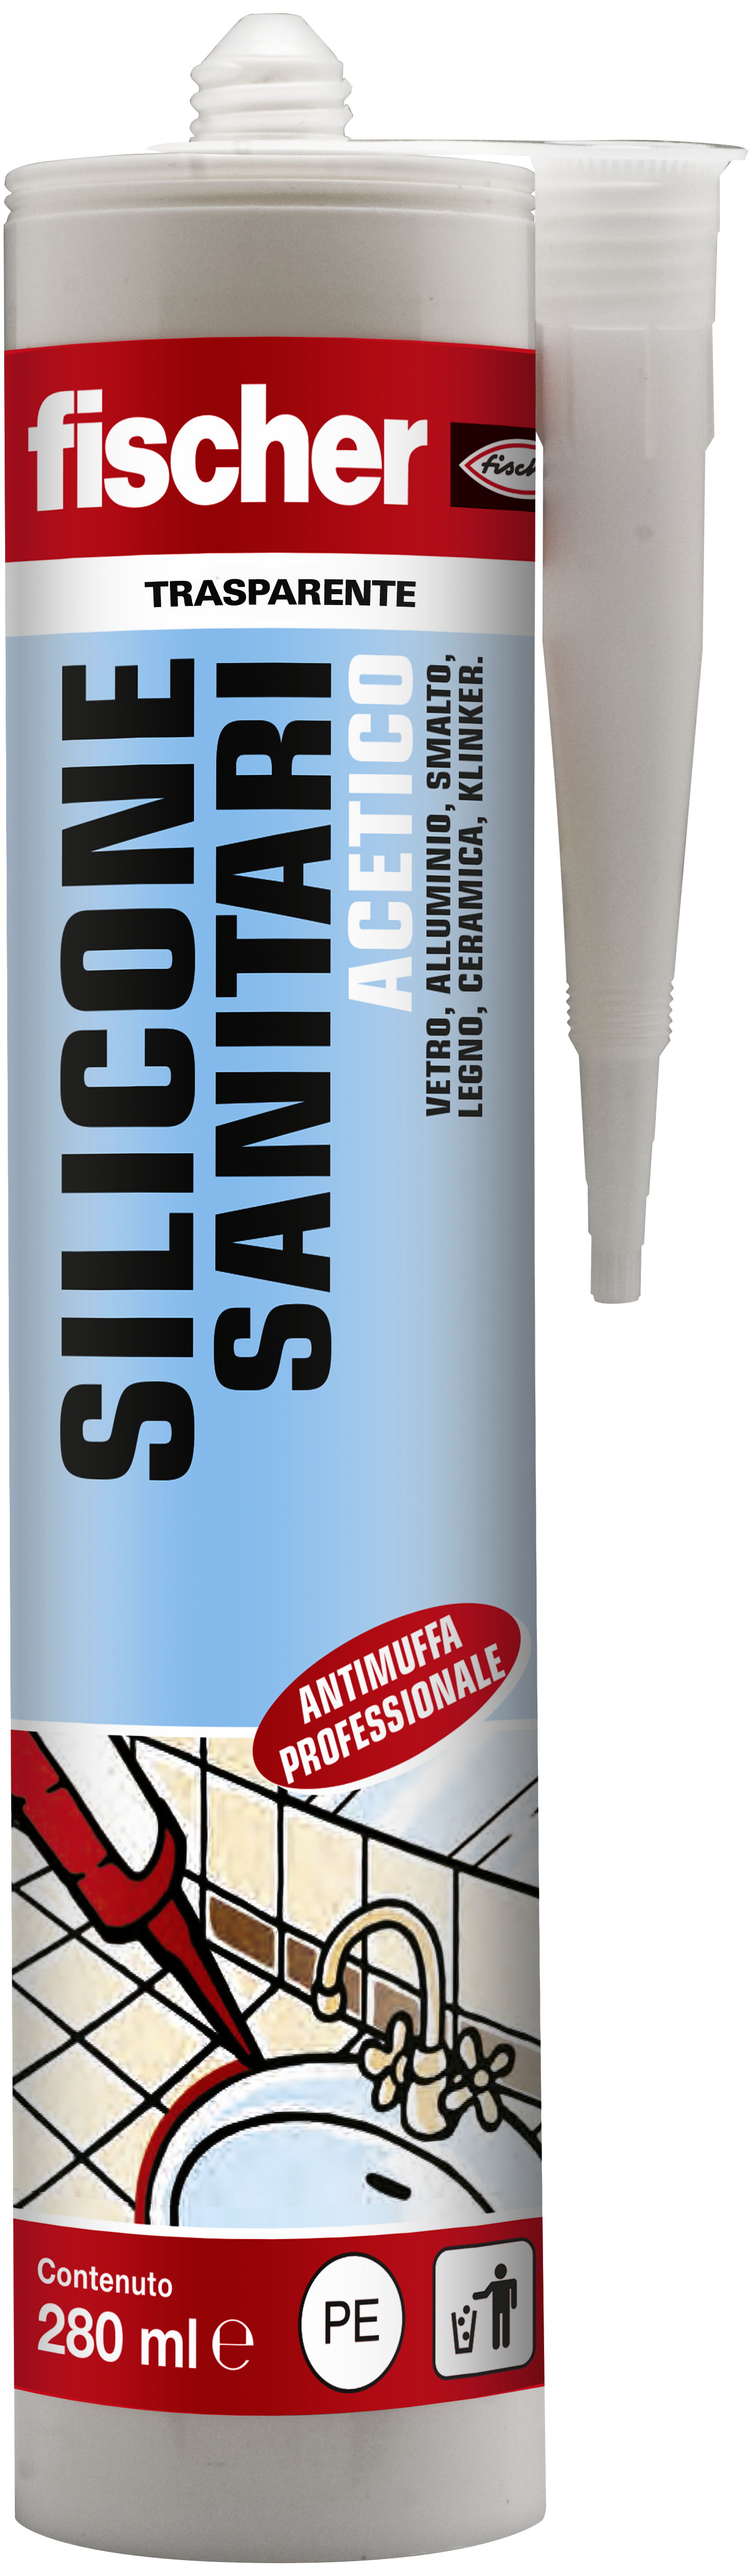 fischer Sigillante acetico sanitari SAS 280 TR - Trasparente (1 Pz.) Sigillante siliconico a base acetica per l'impiego in ambienti sanitari fie75